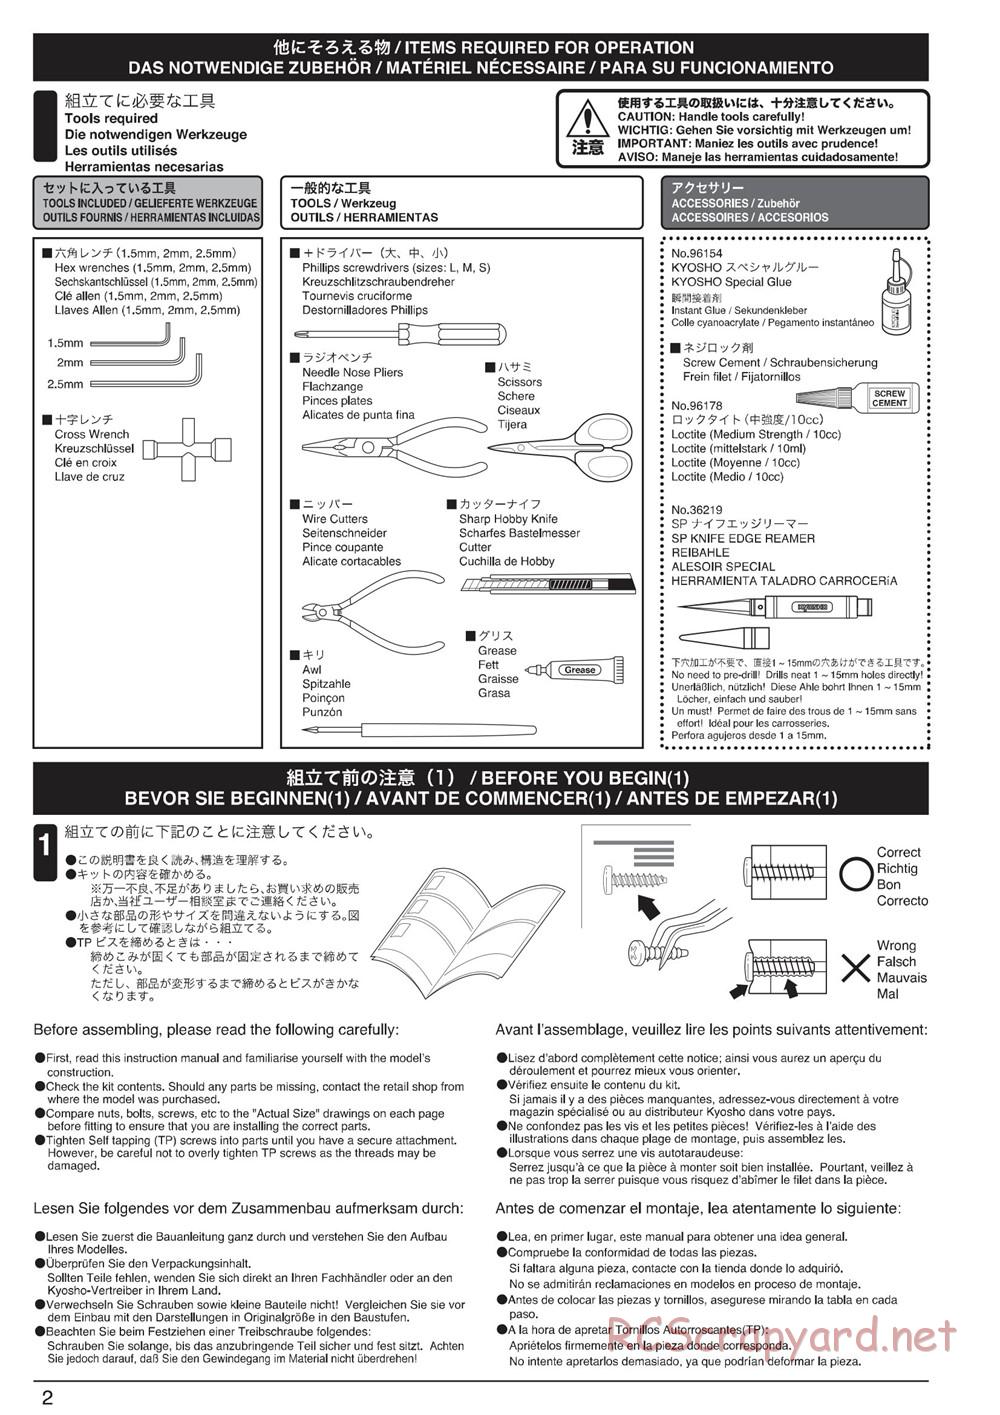 Kyosho - Ultima-DB - Manual - Page 2